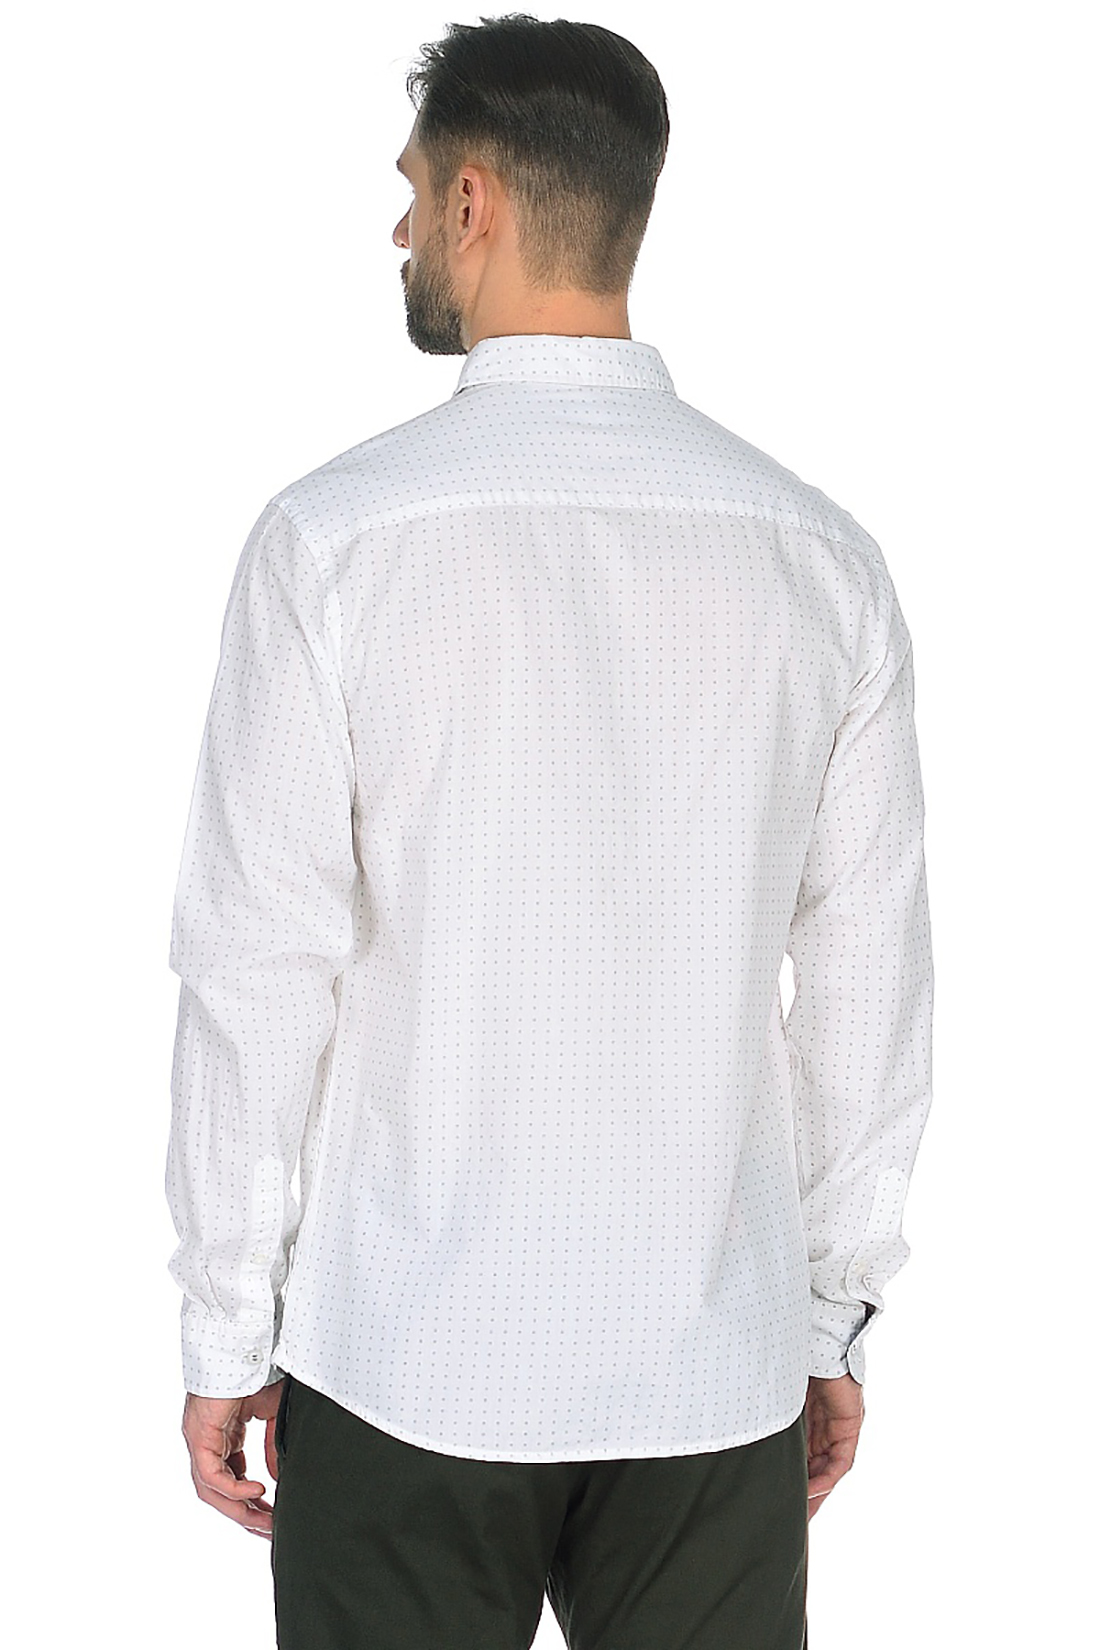 Рубашка с геометрическим узором (арт. baon B668015), размер XL, цвет white printed#белый Рубашка с геометрическим узором (арт. baon B668015) - фото 2